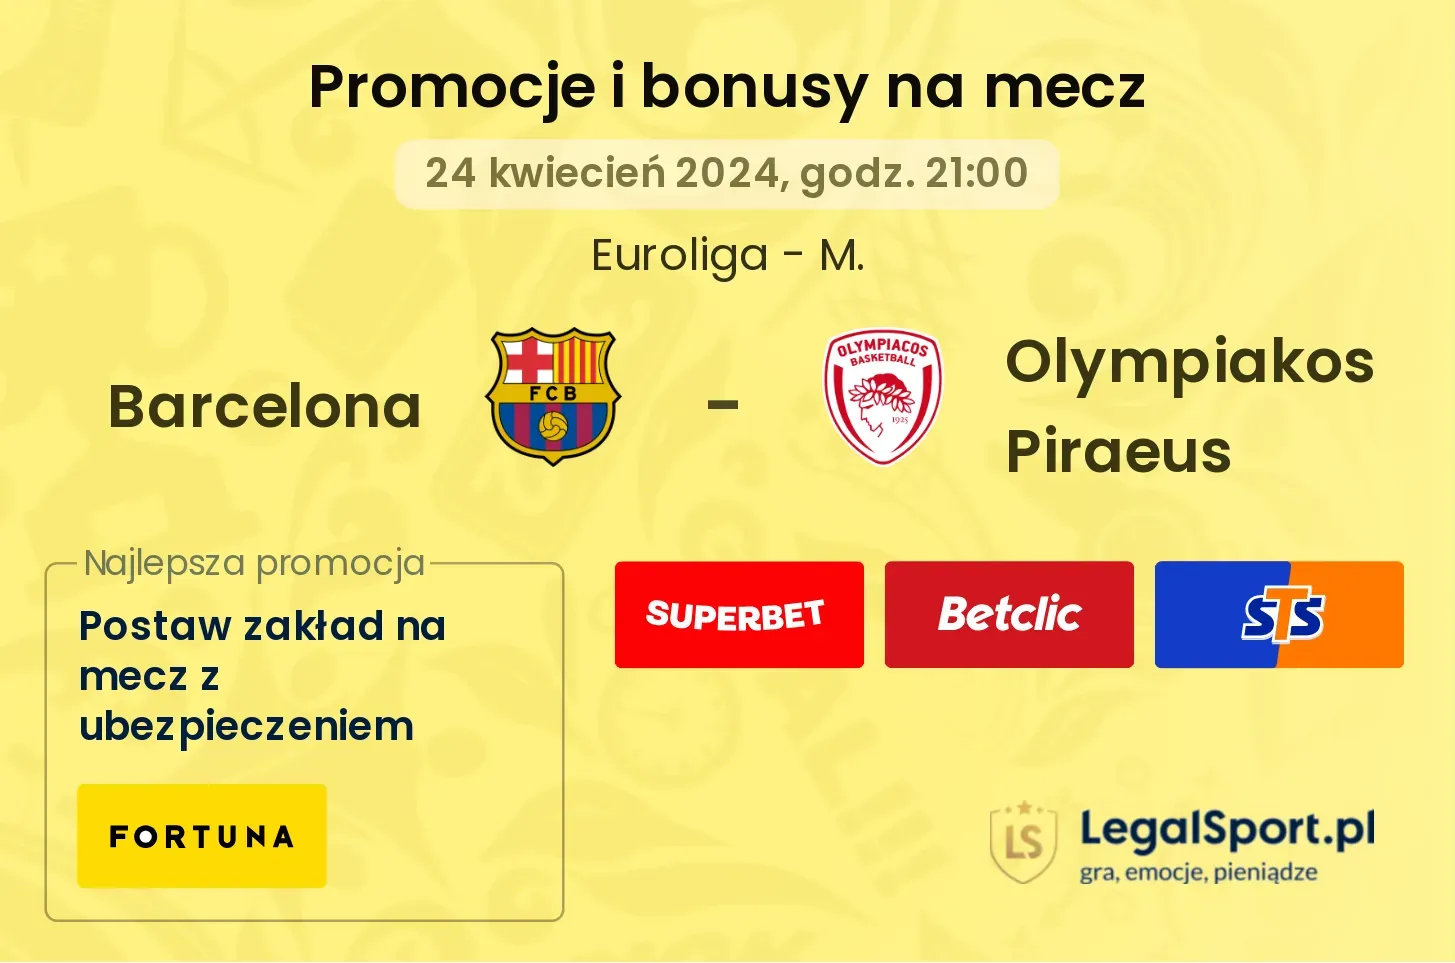 Barcelona - Olympiakos Piraeus promocje bonusy na mecz